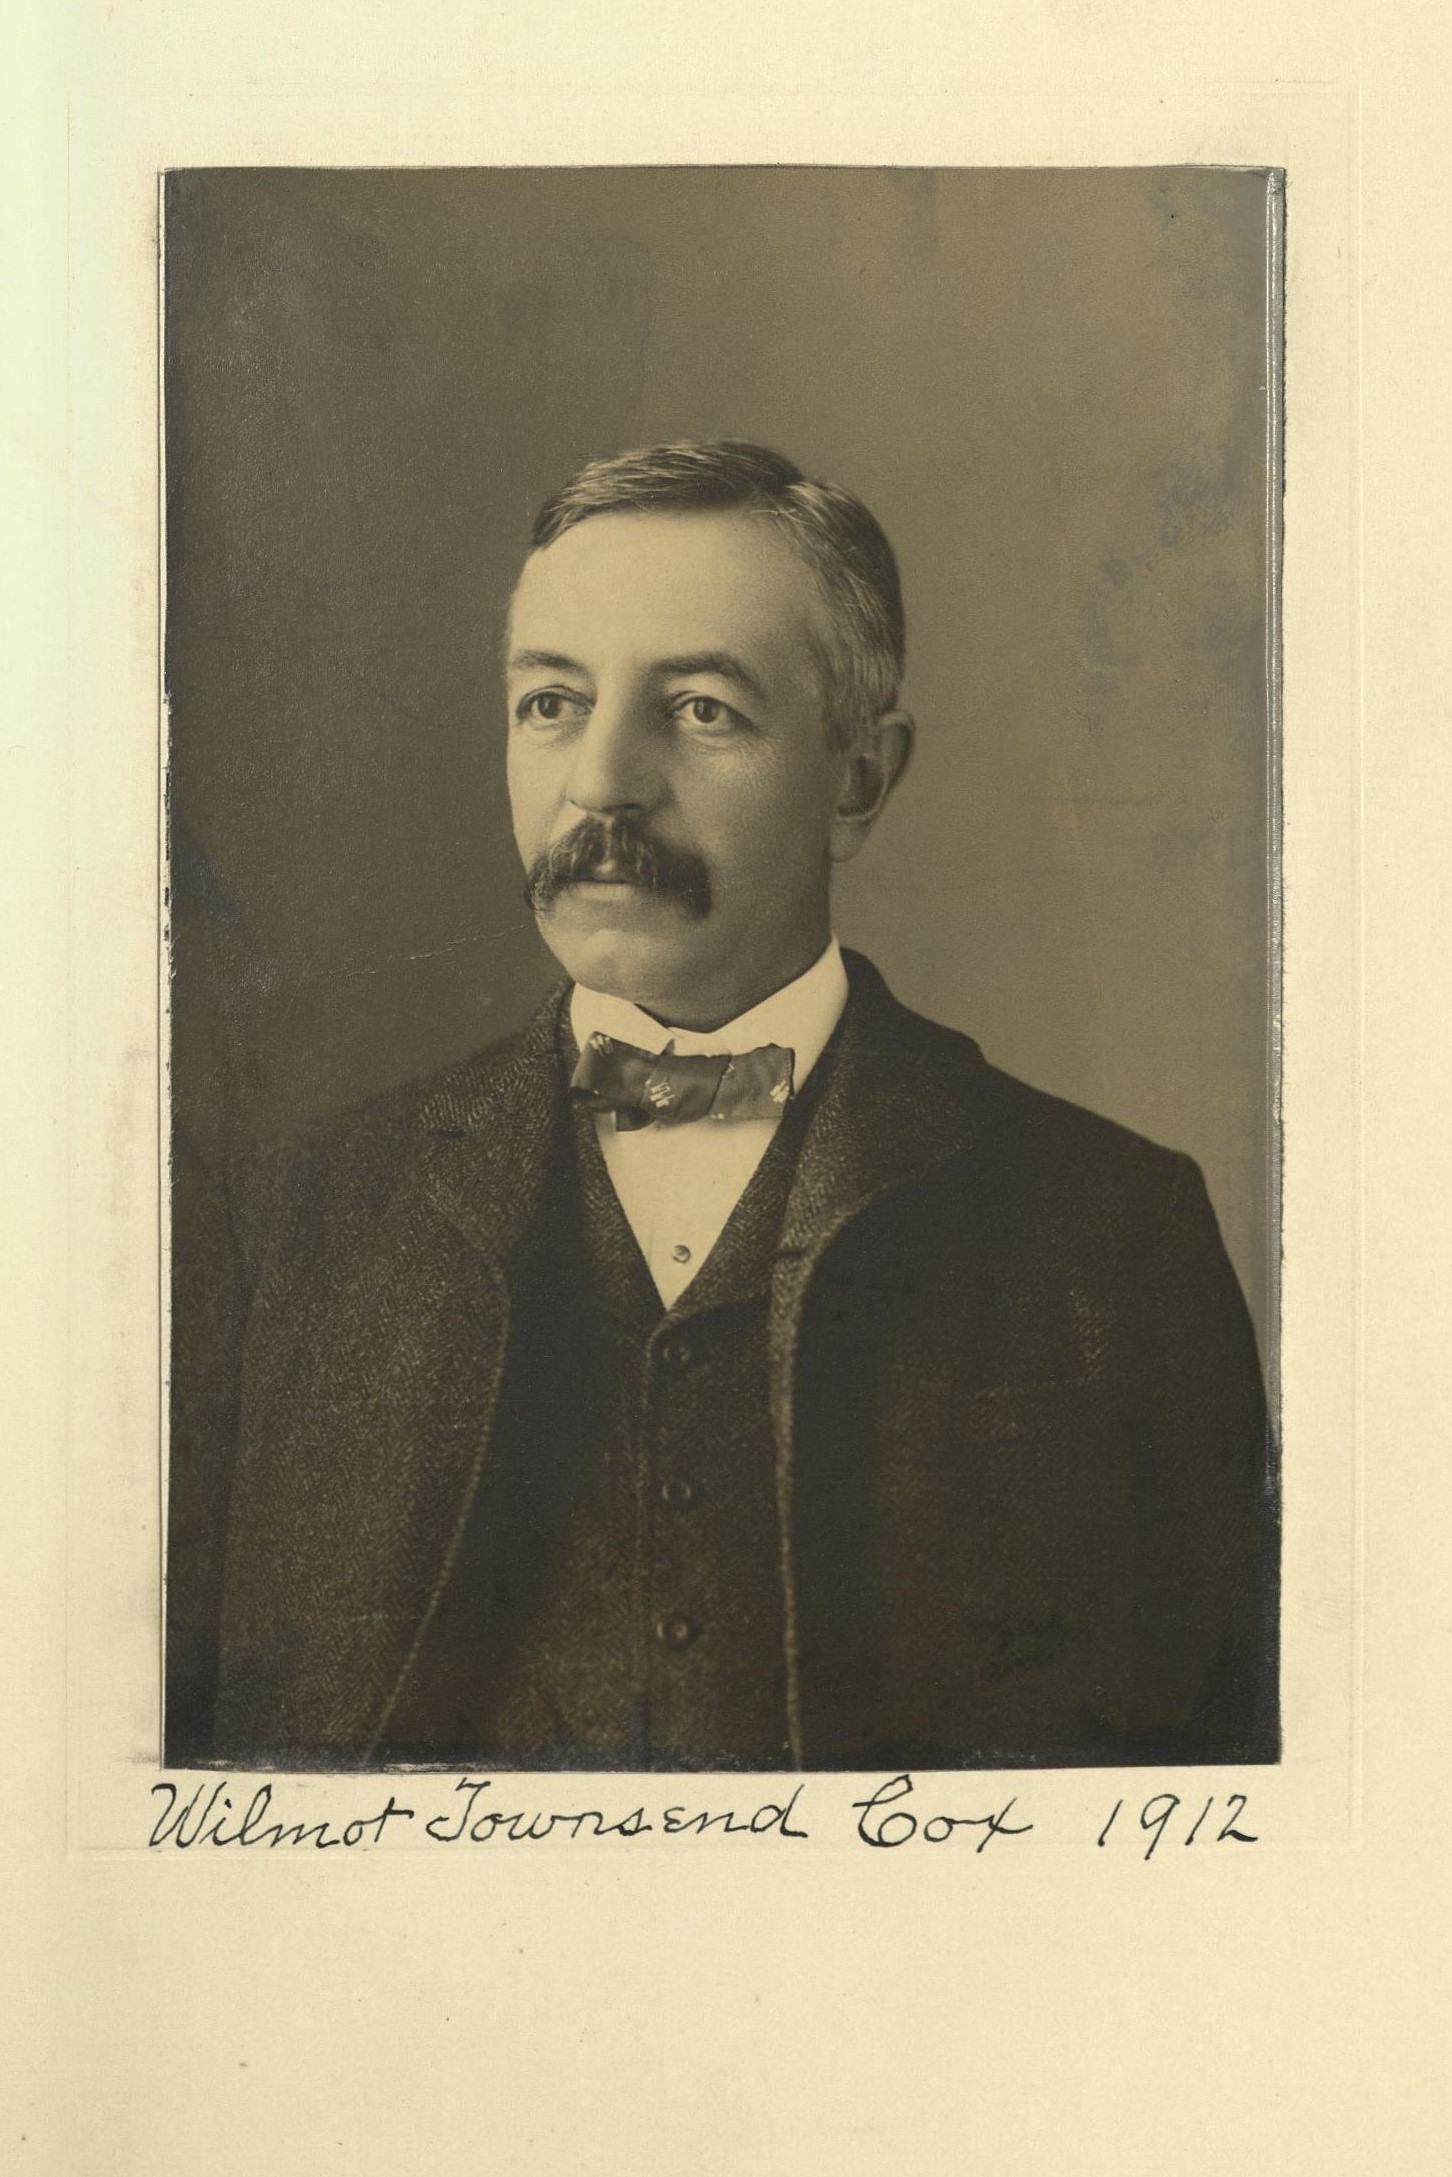 Member portrait of Wilmot Townsend Cox